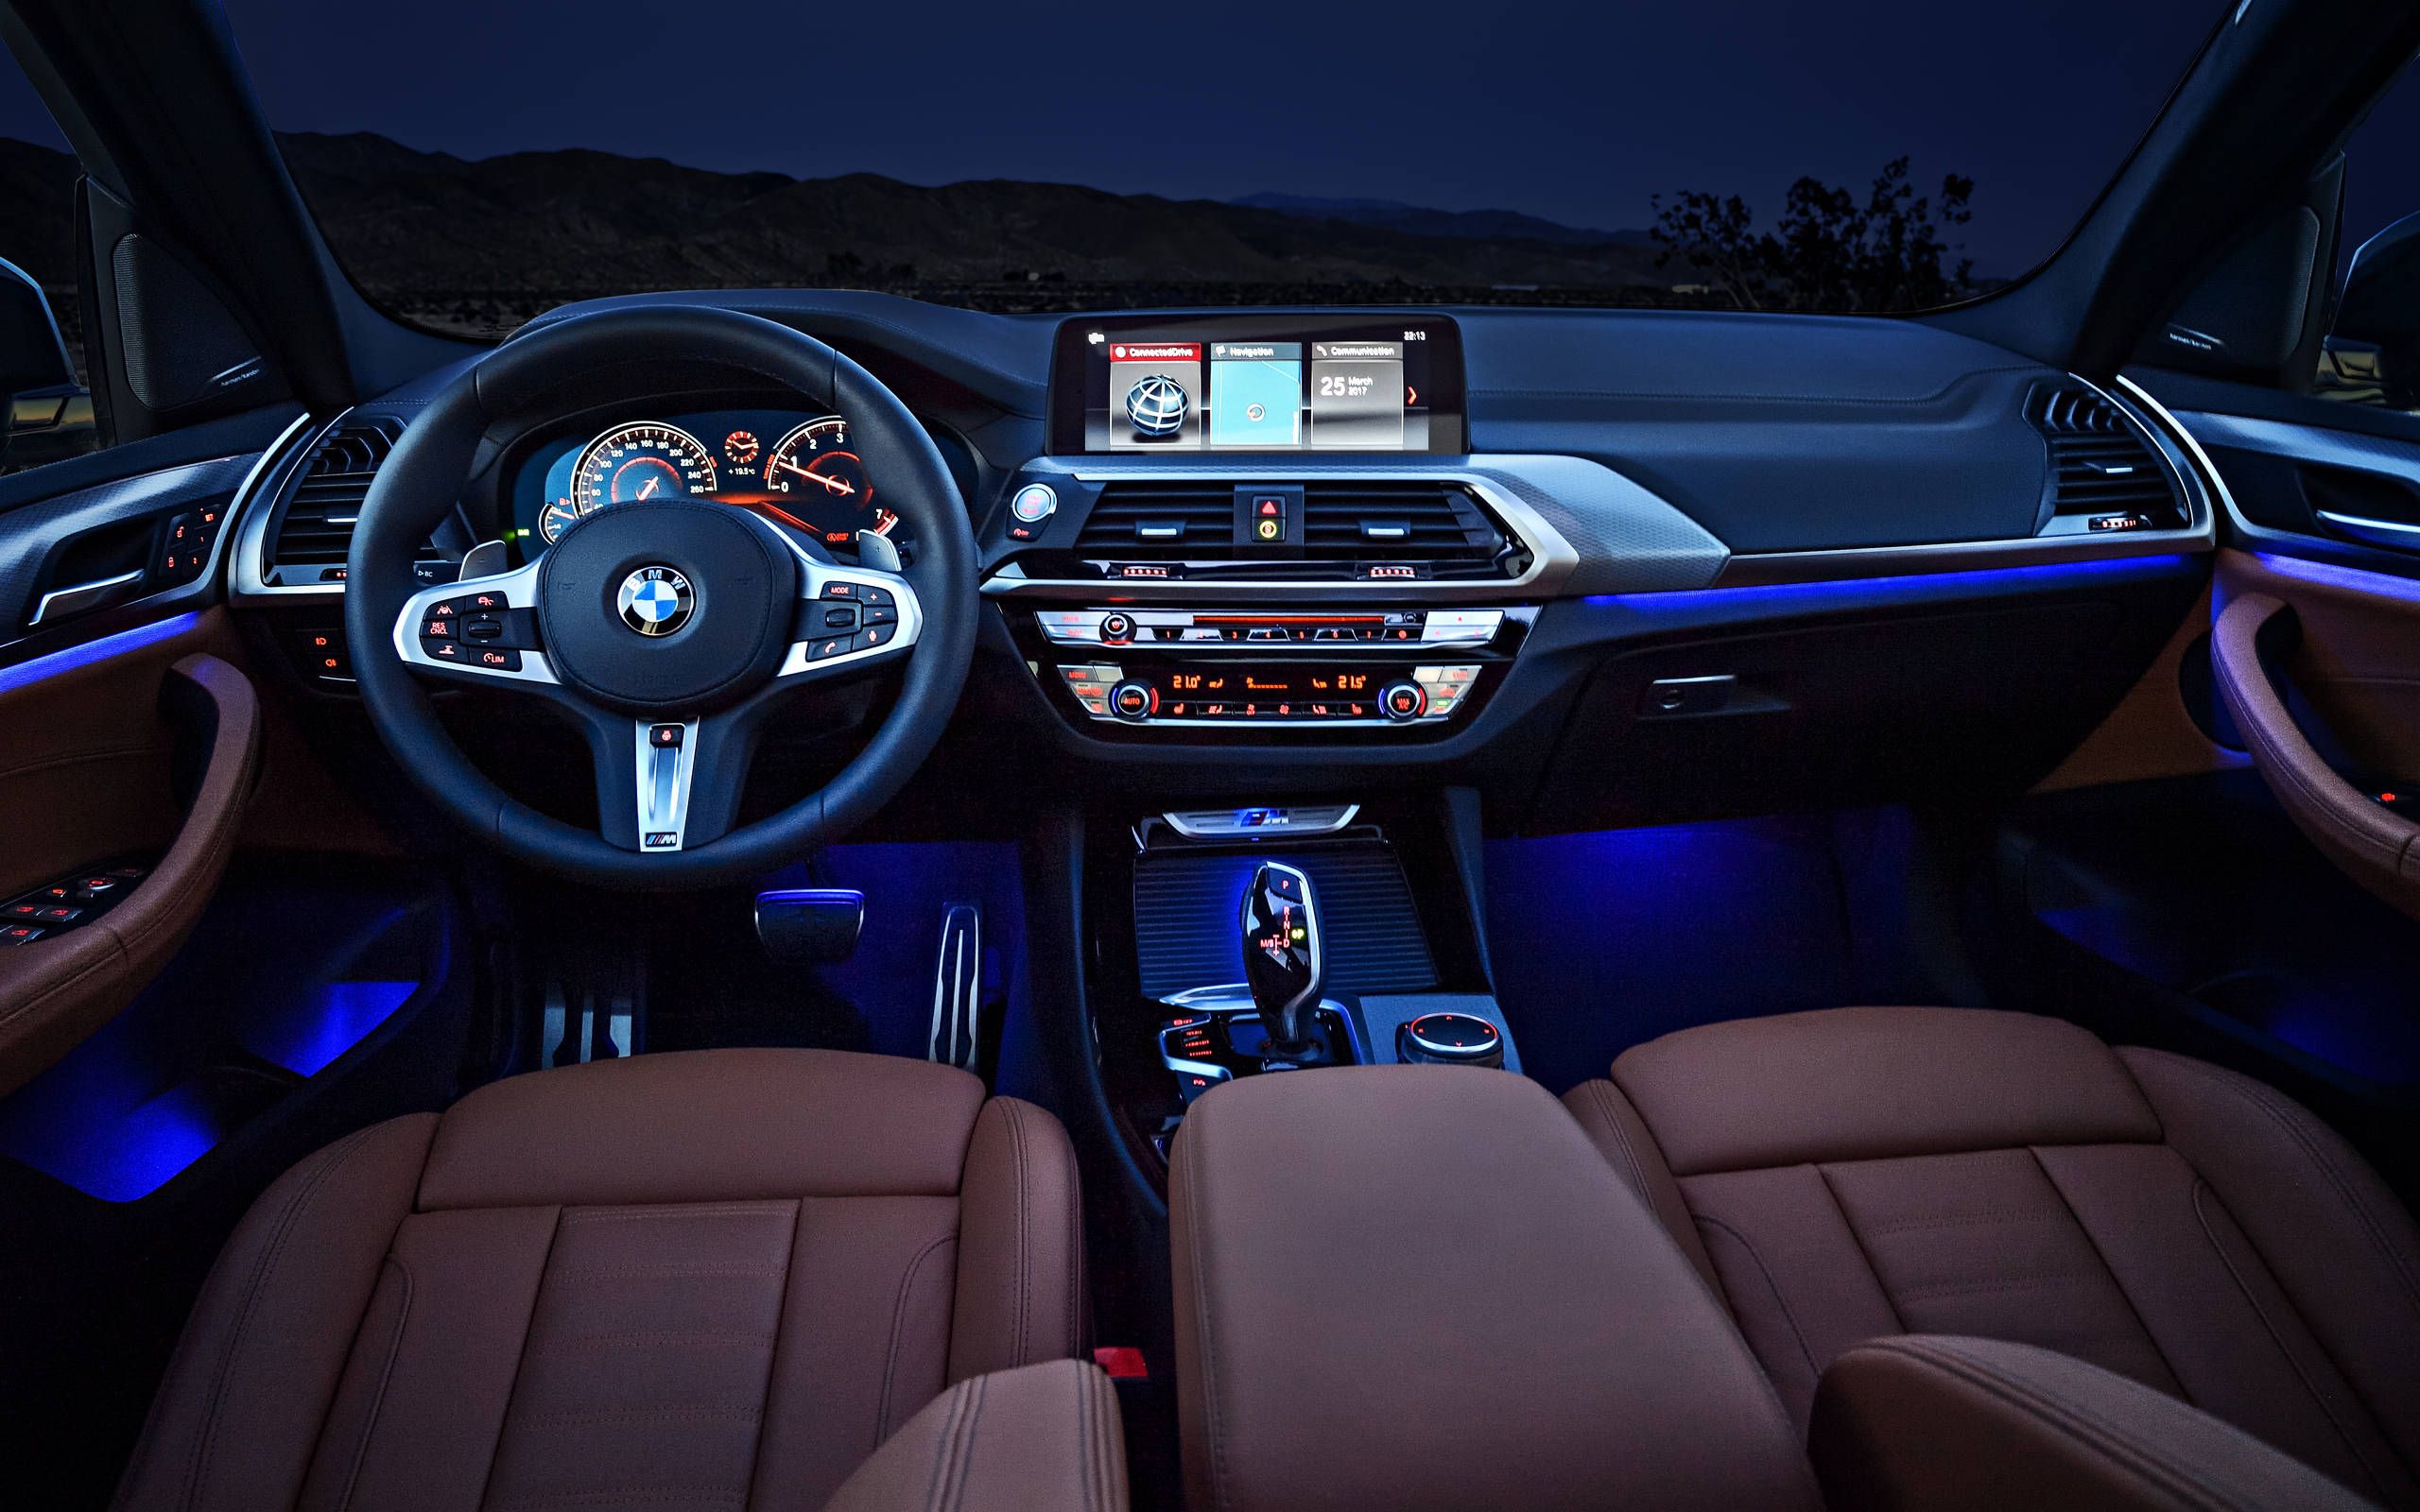 2018 BMW X3 xDrive 30i essentials: Heavy on sport, light on utility